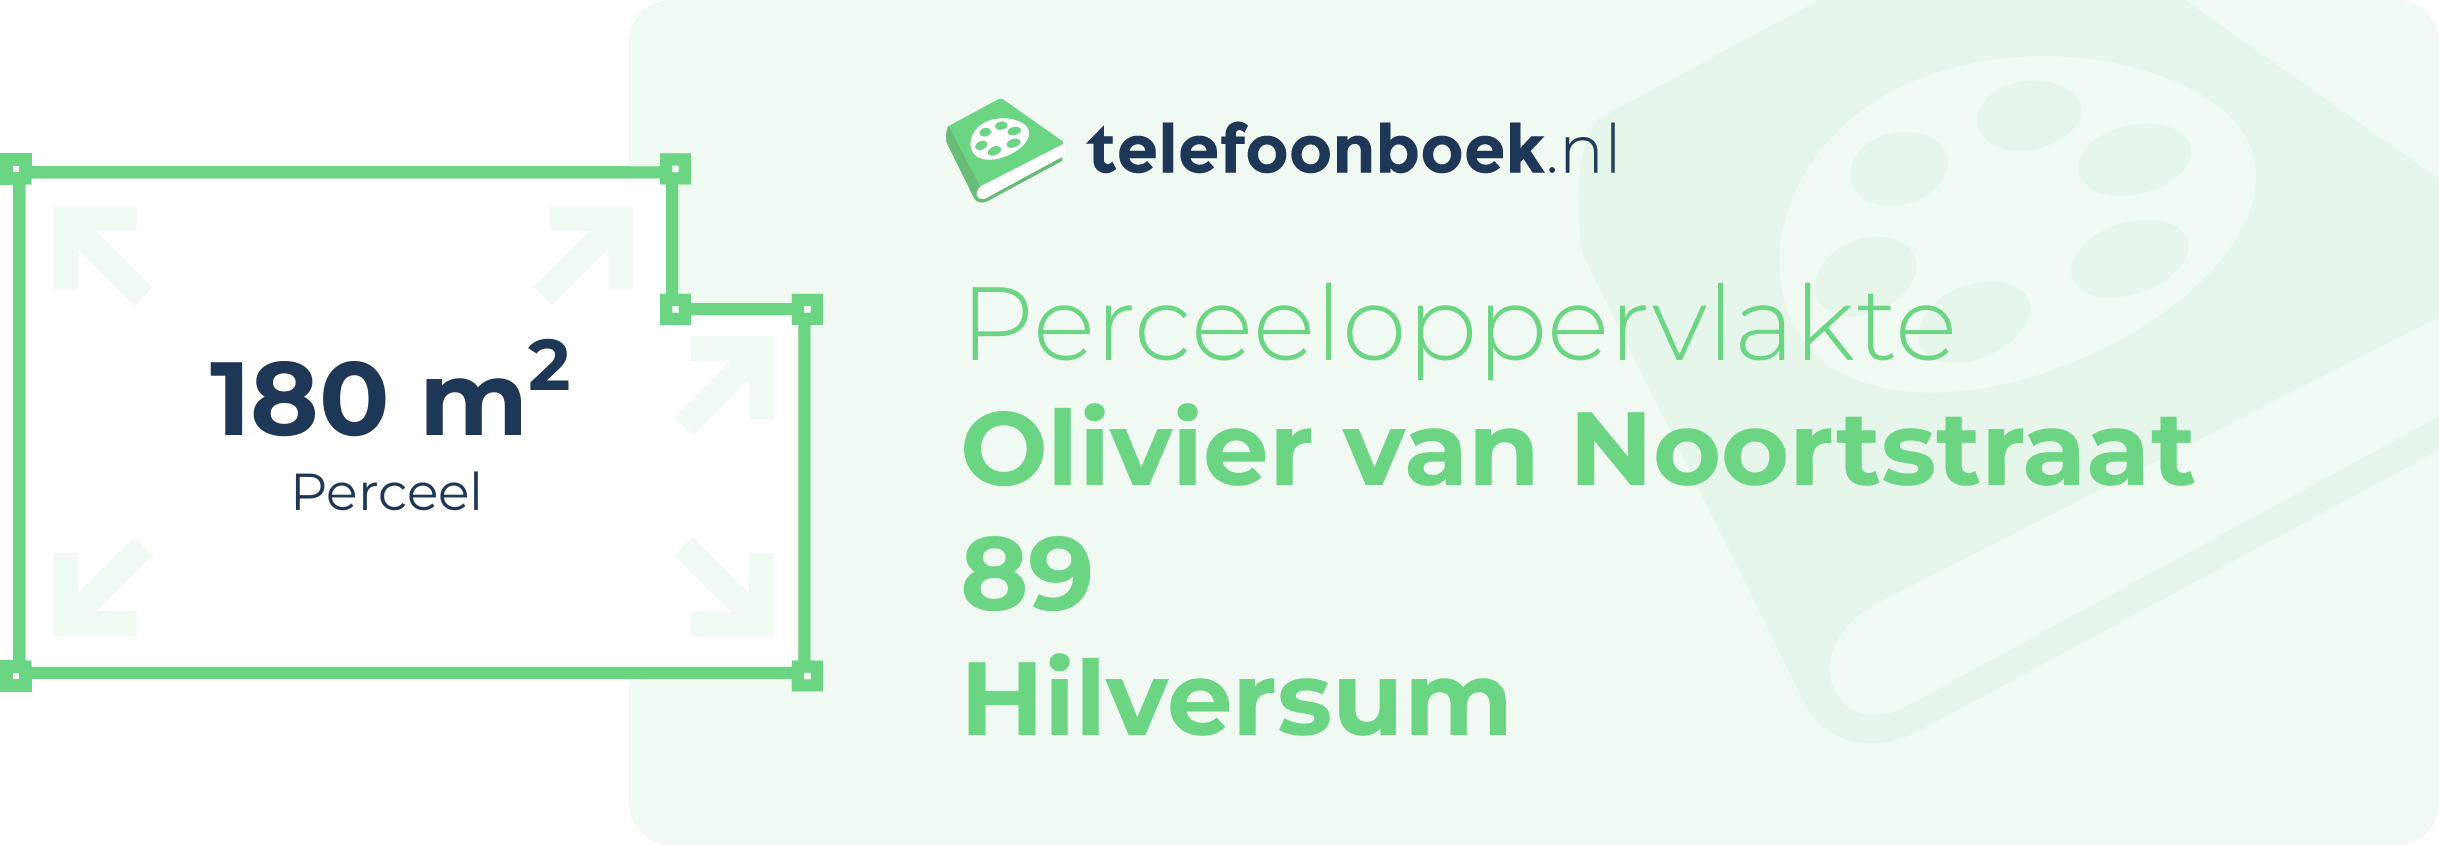 Perceeloppervlakte Olivier Van Noortstraat 89 Hilversum